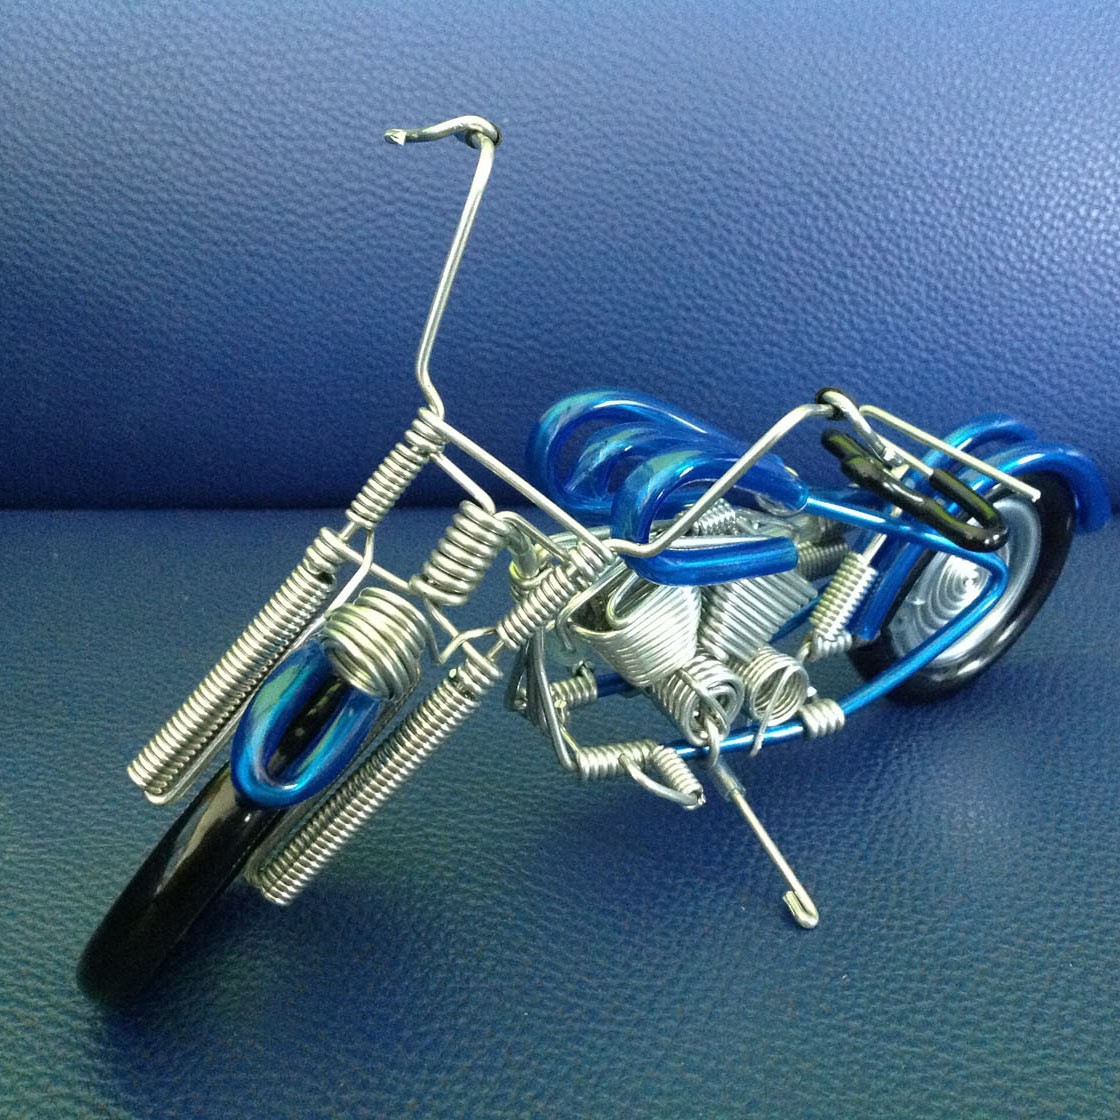 Handmade Motorcycle Wire Sculpture – BOMONSTER